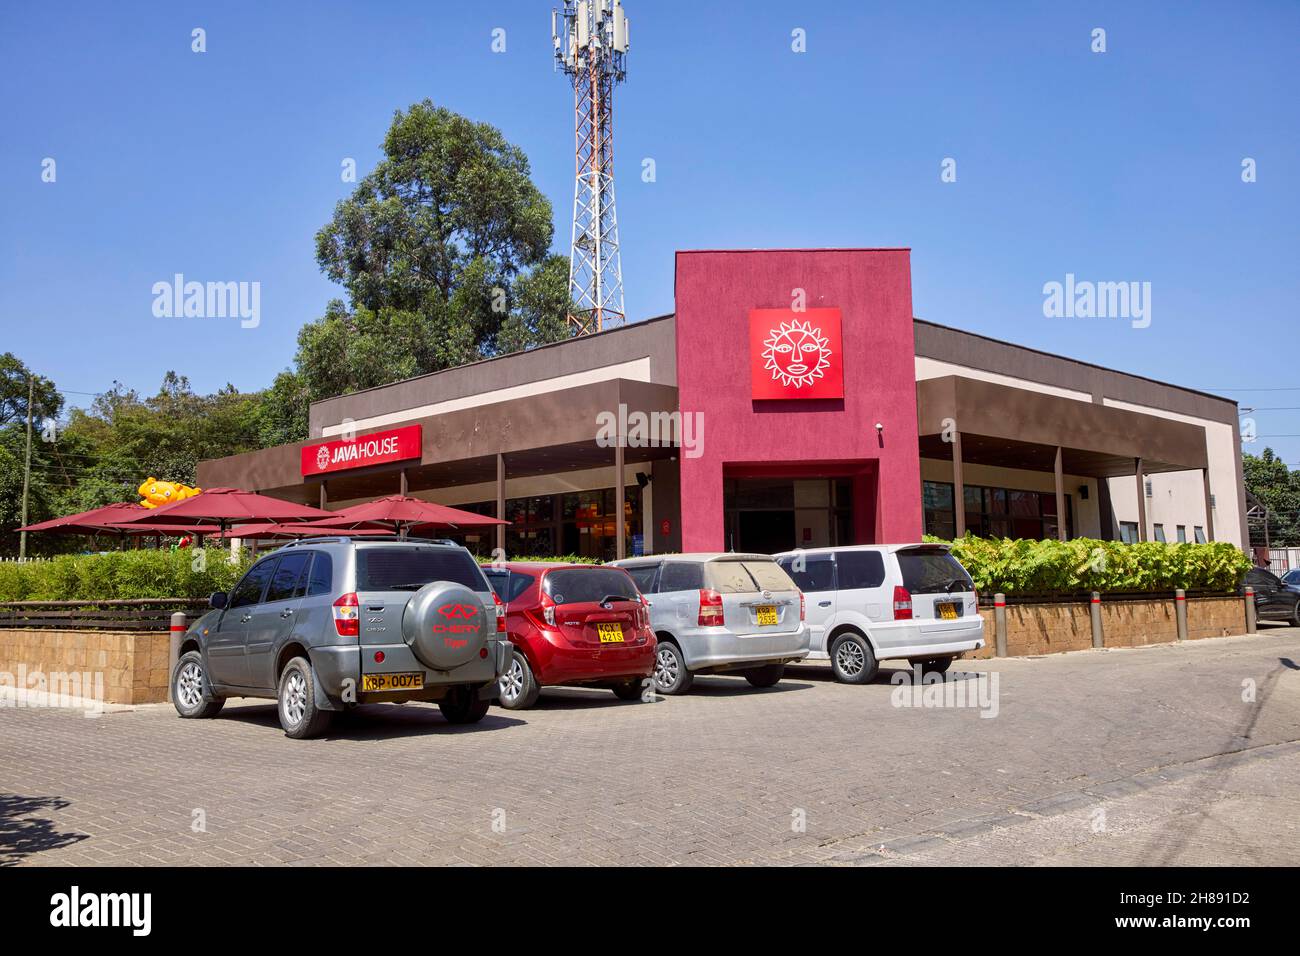 Java House Café in Nairobi Kenia Afrika Stockfoto